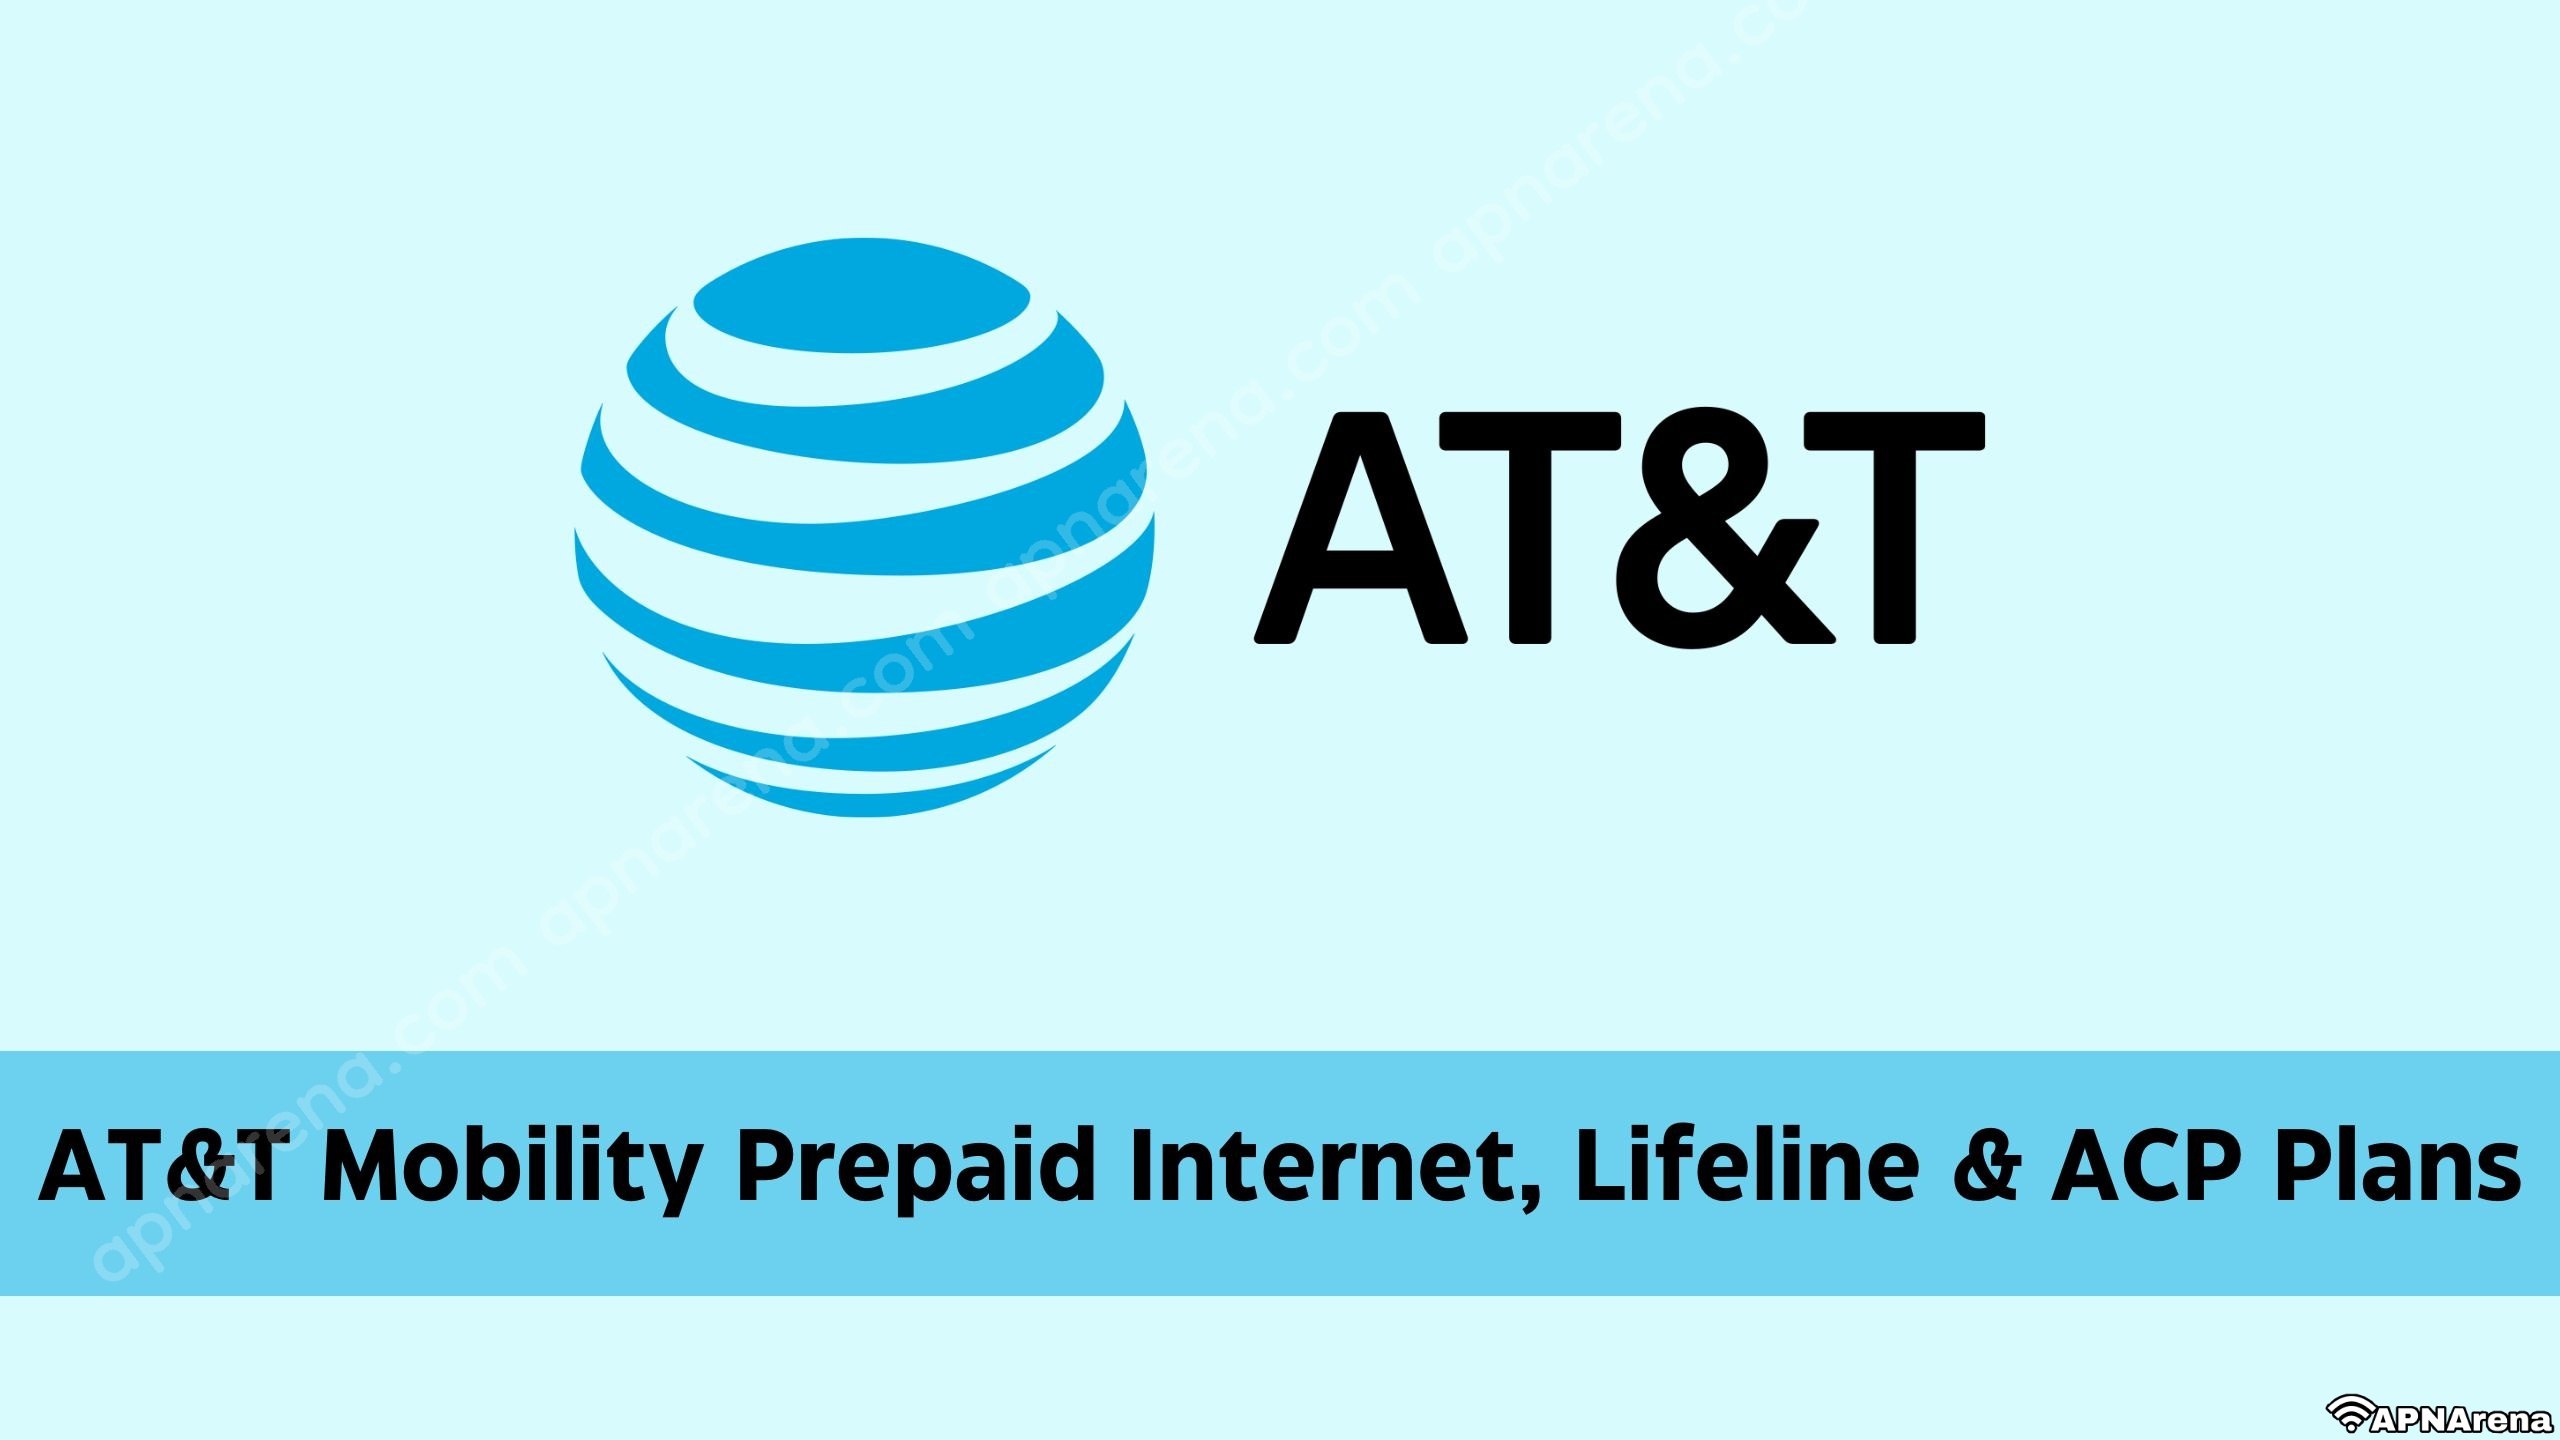 AT&T Mobility Prepaid Internet : Lifeline, ACP, Unlimited Data, Talk & Text Plans